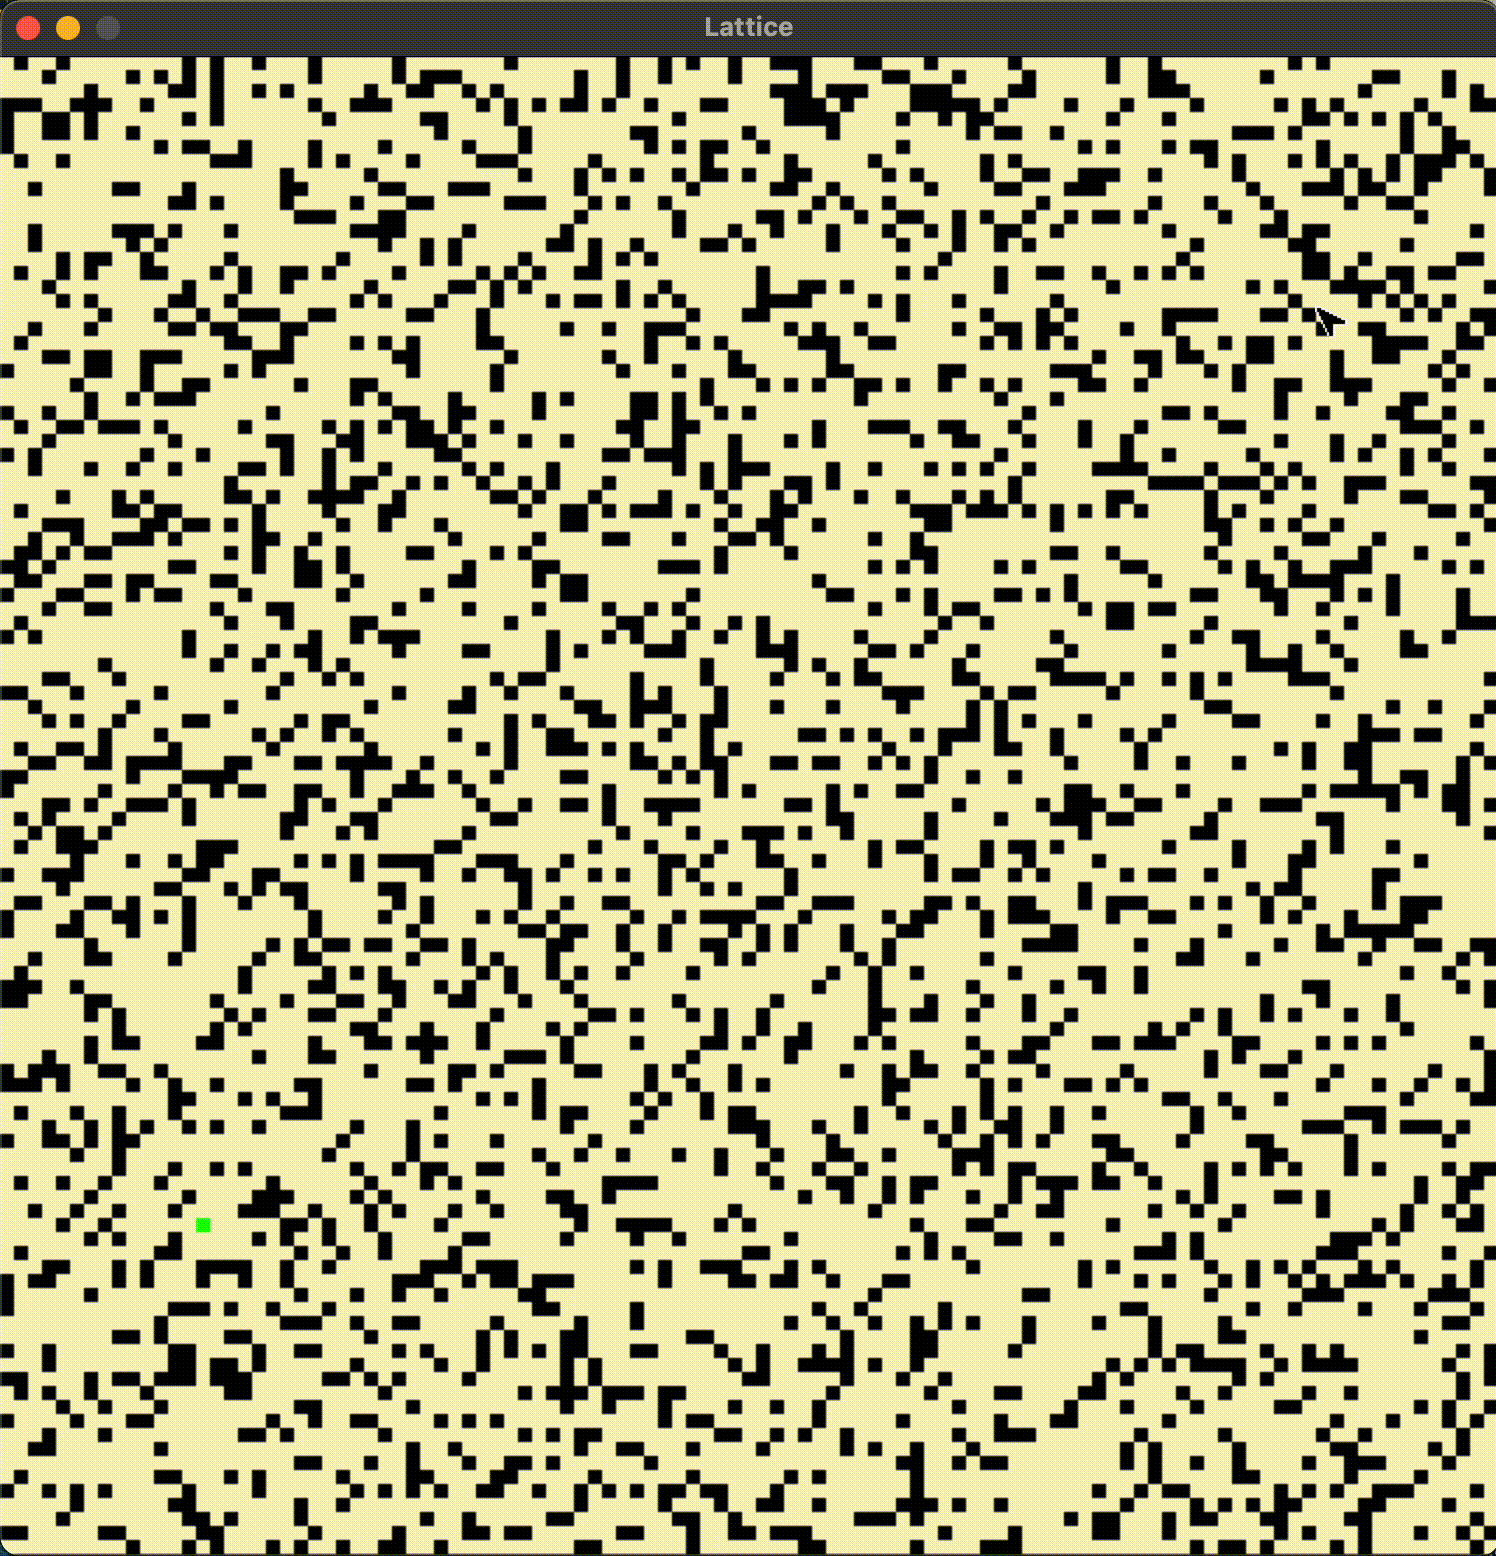 DFS on the lattice with randomized walls